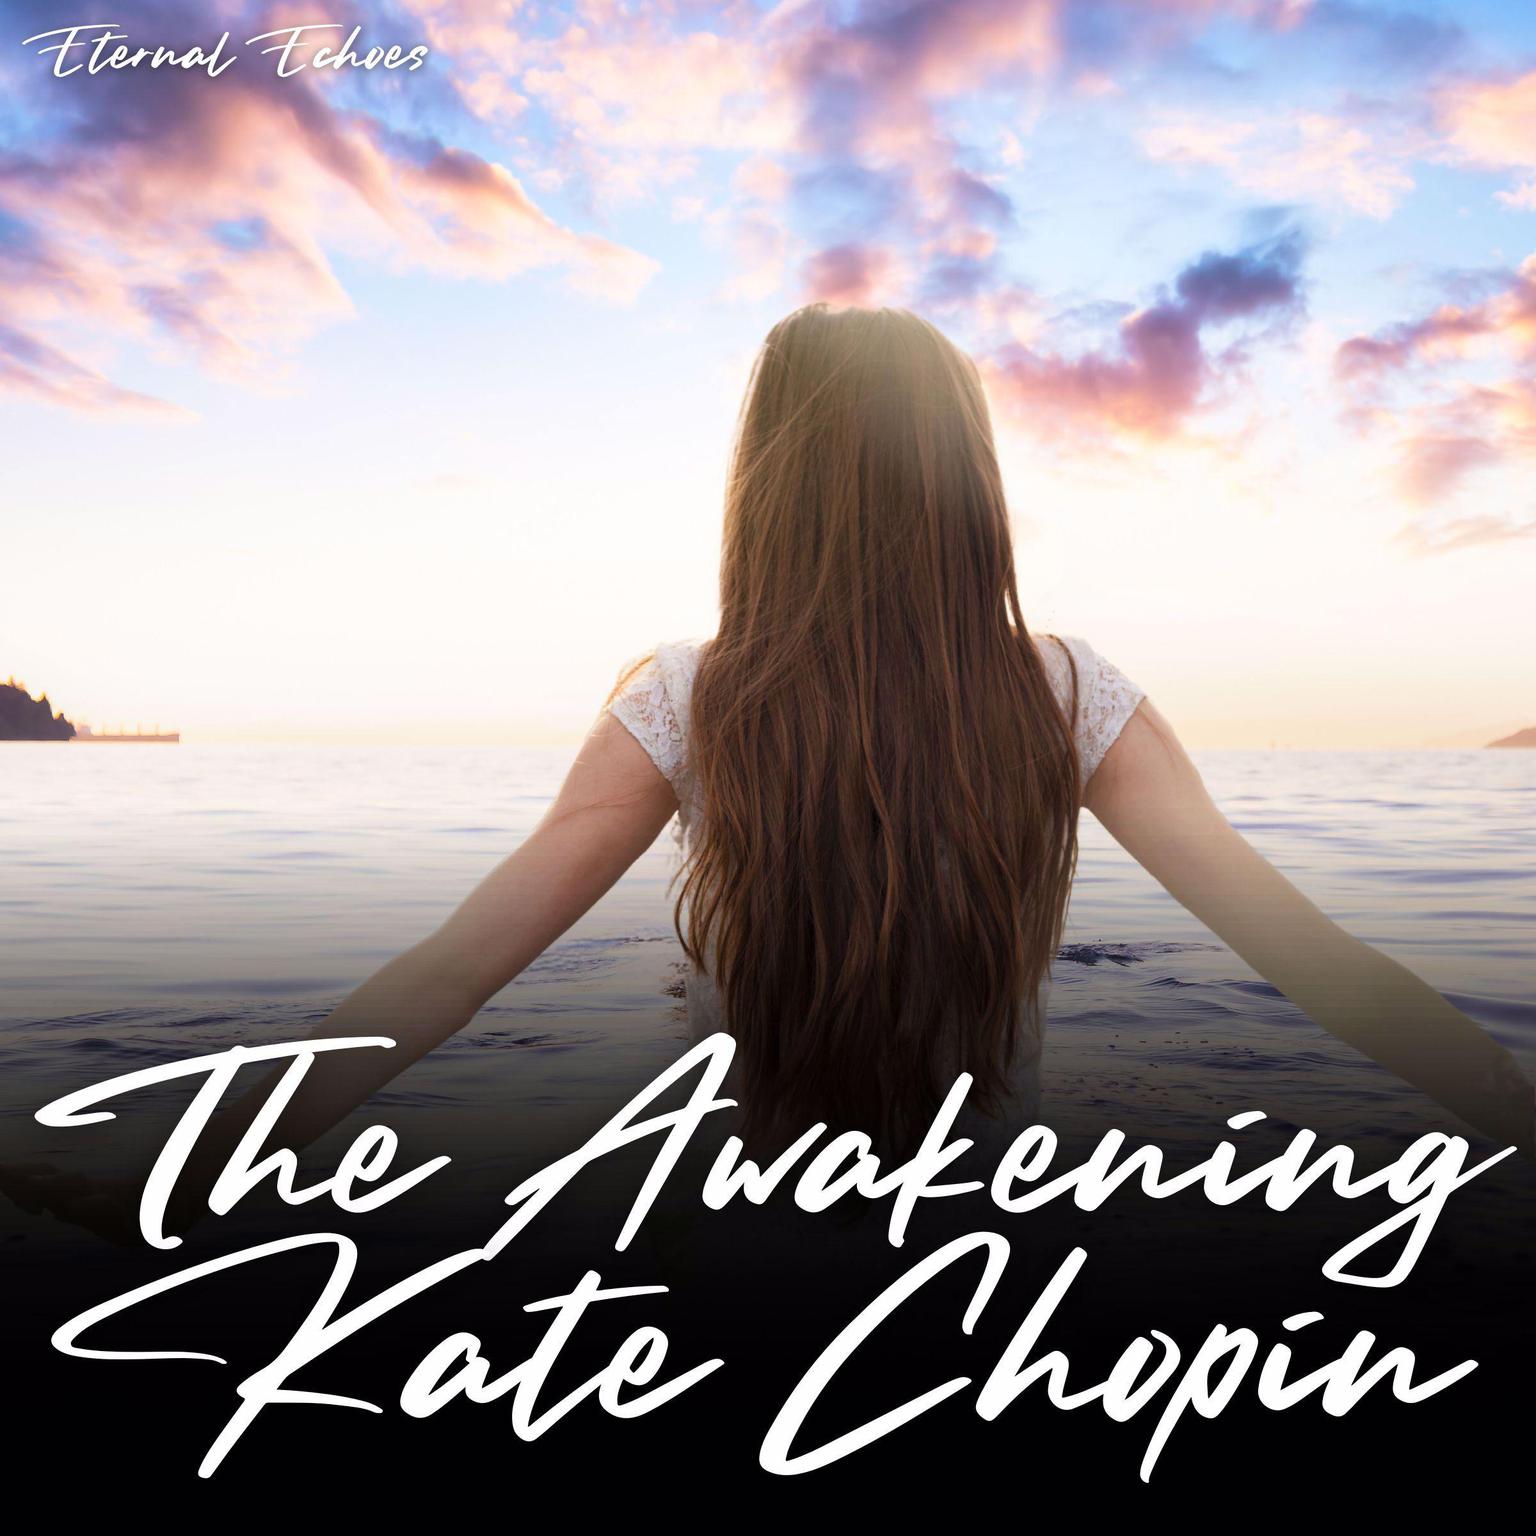 The Awakening (Unabridged Version) Audiobook, by Kate Chopin